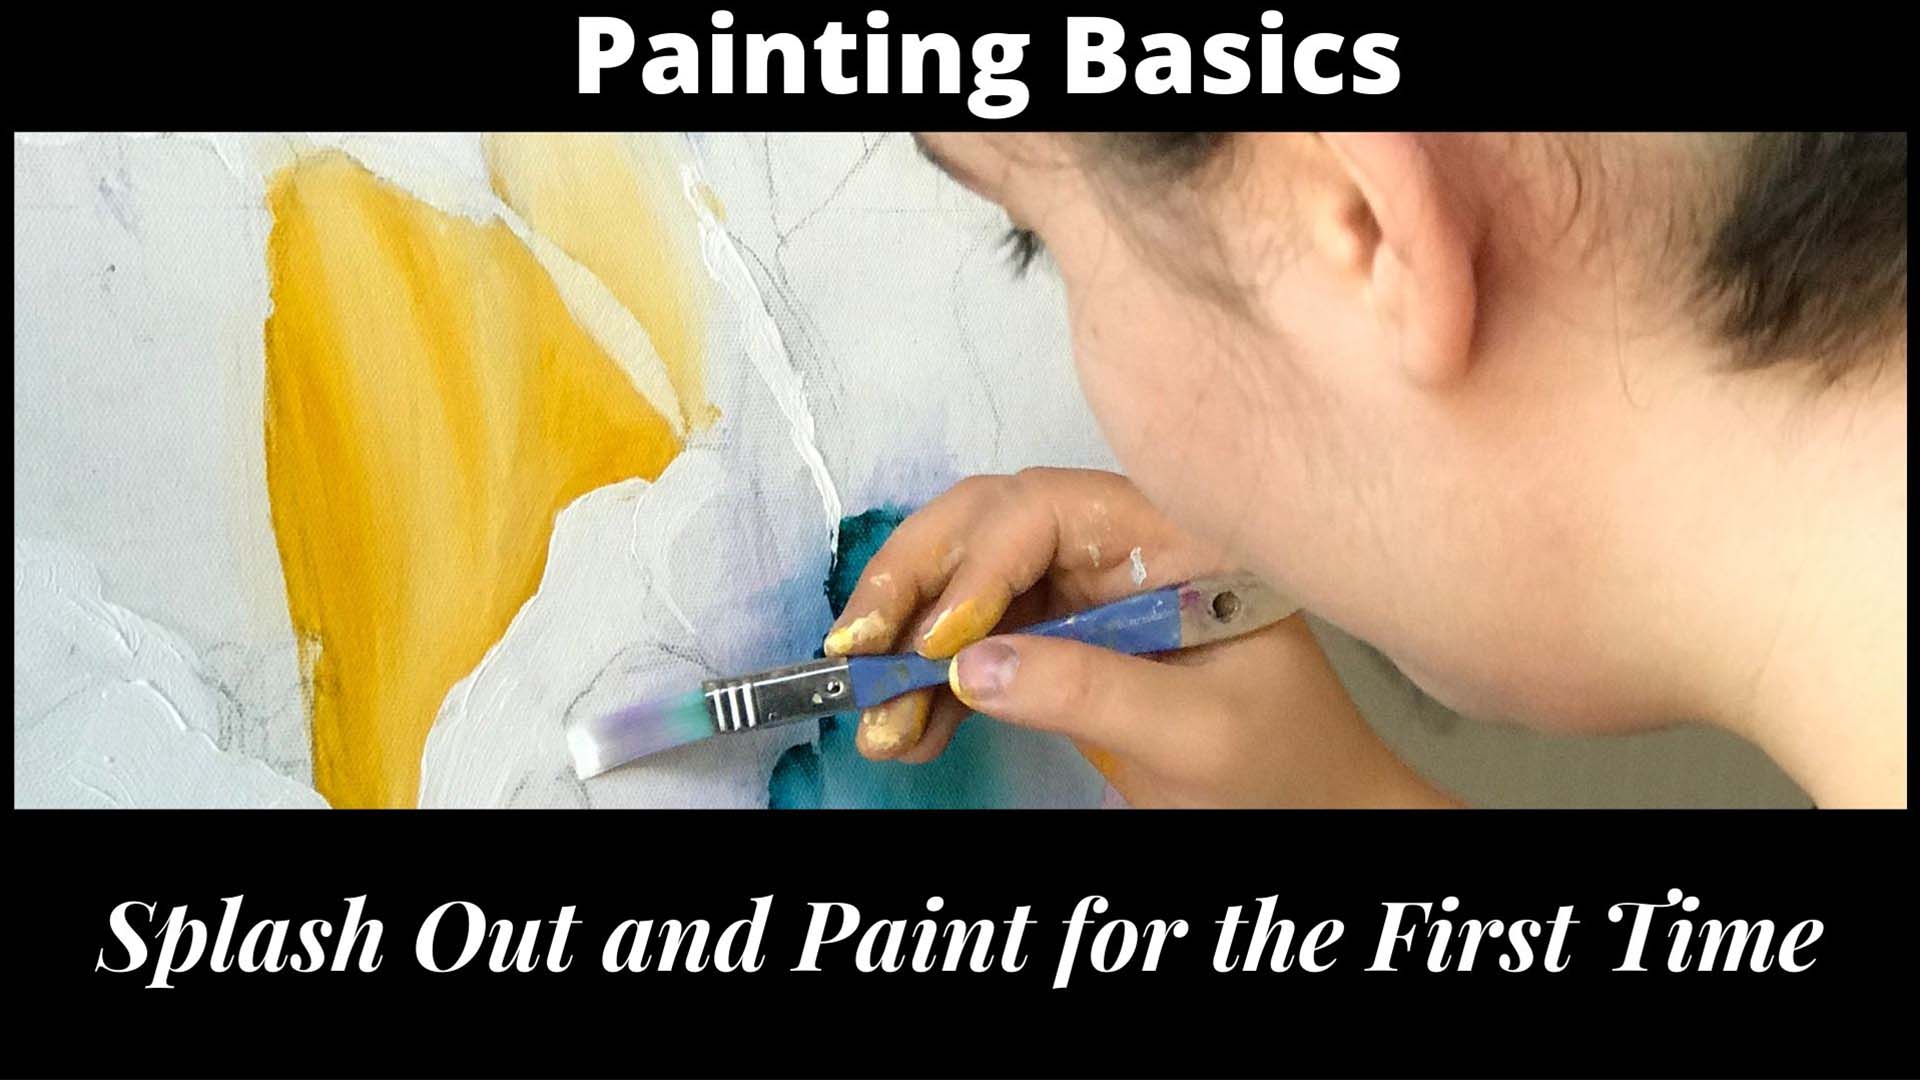 PaintingBasicBannerB